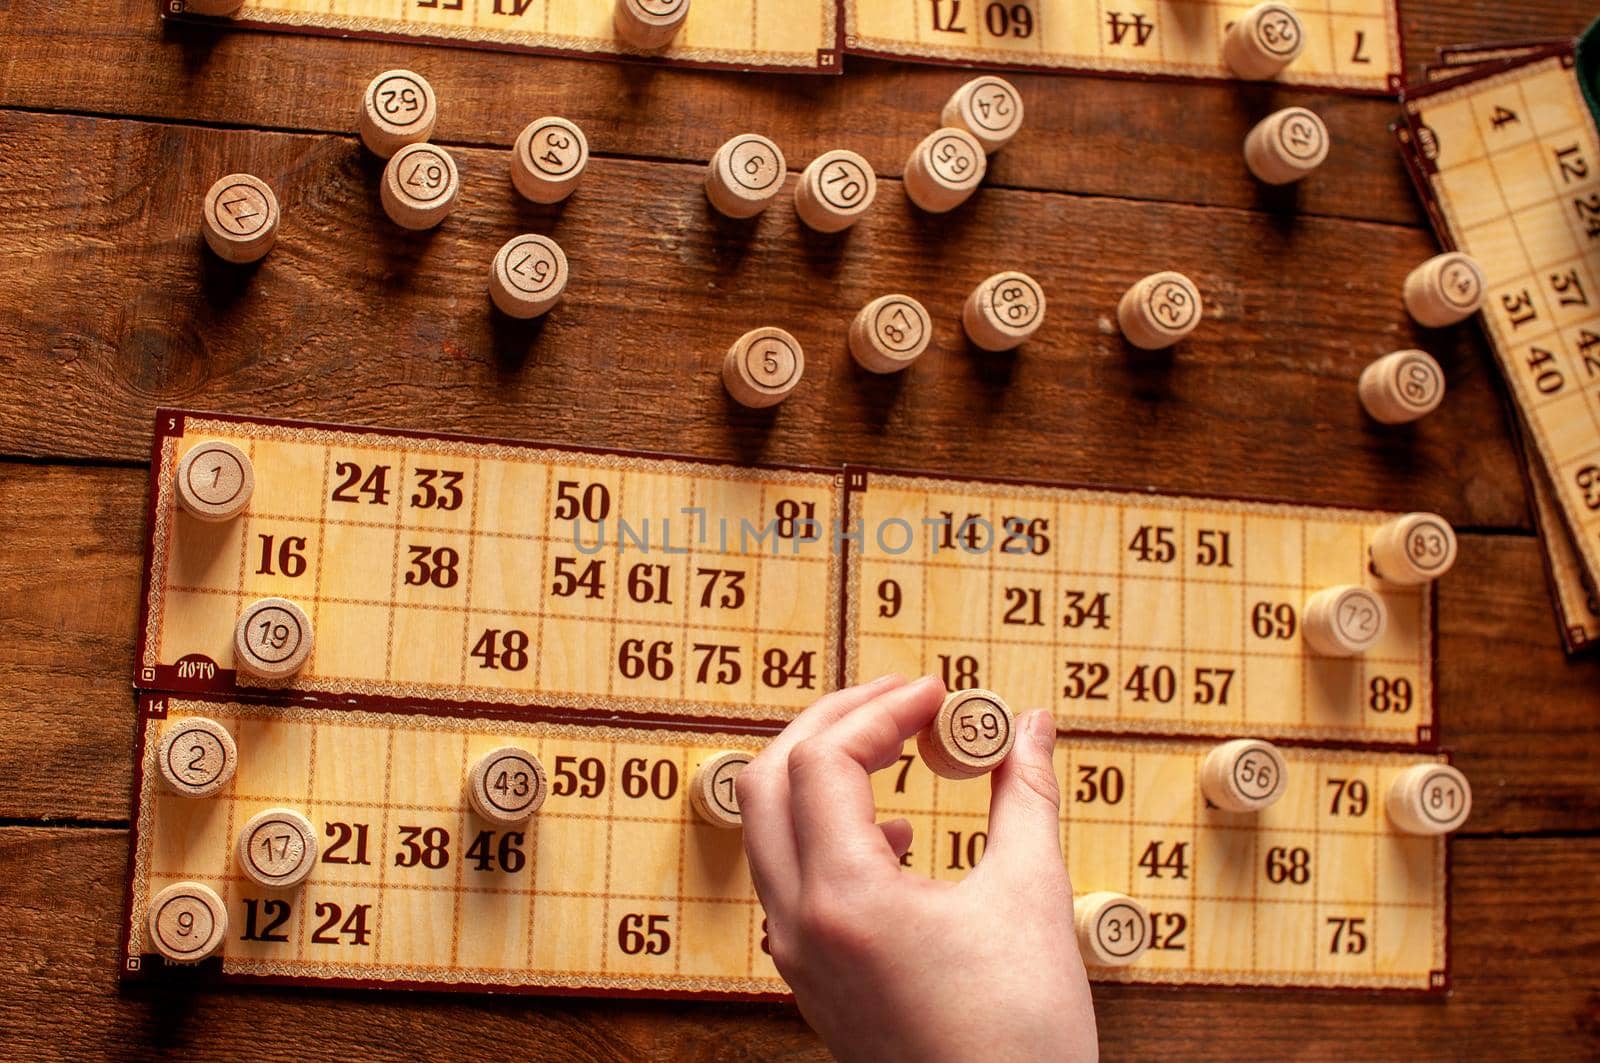 homemade family vintage bingo game by ozornina